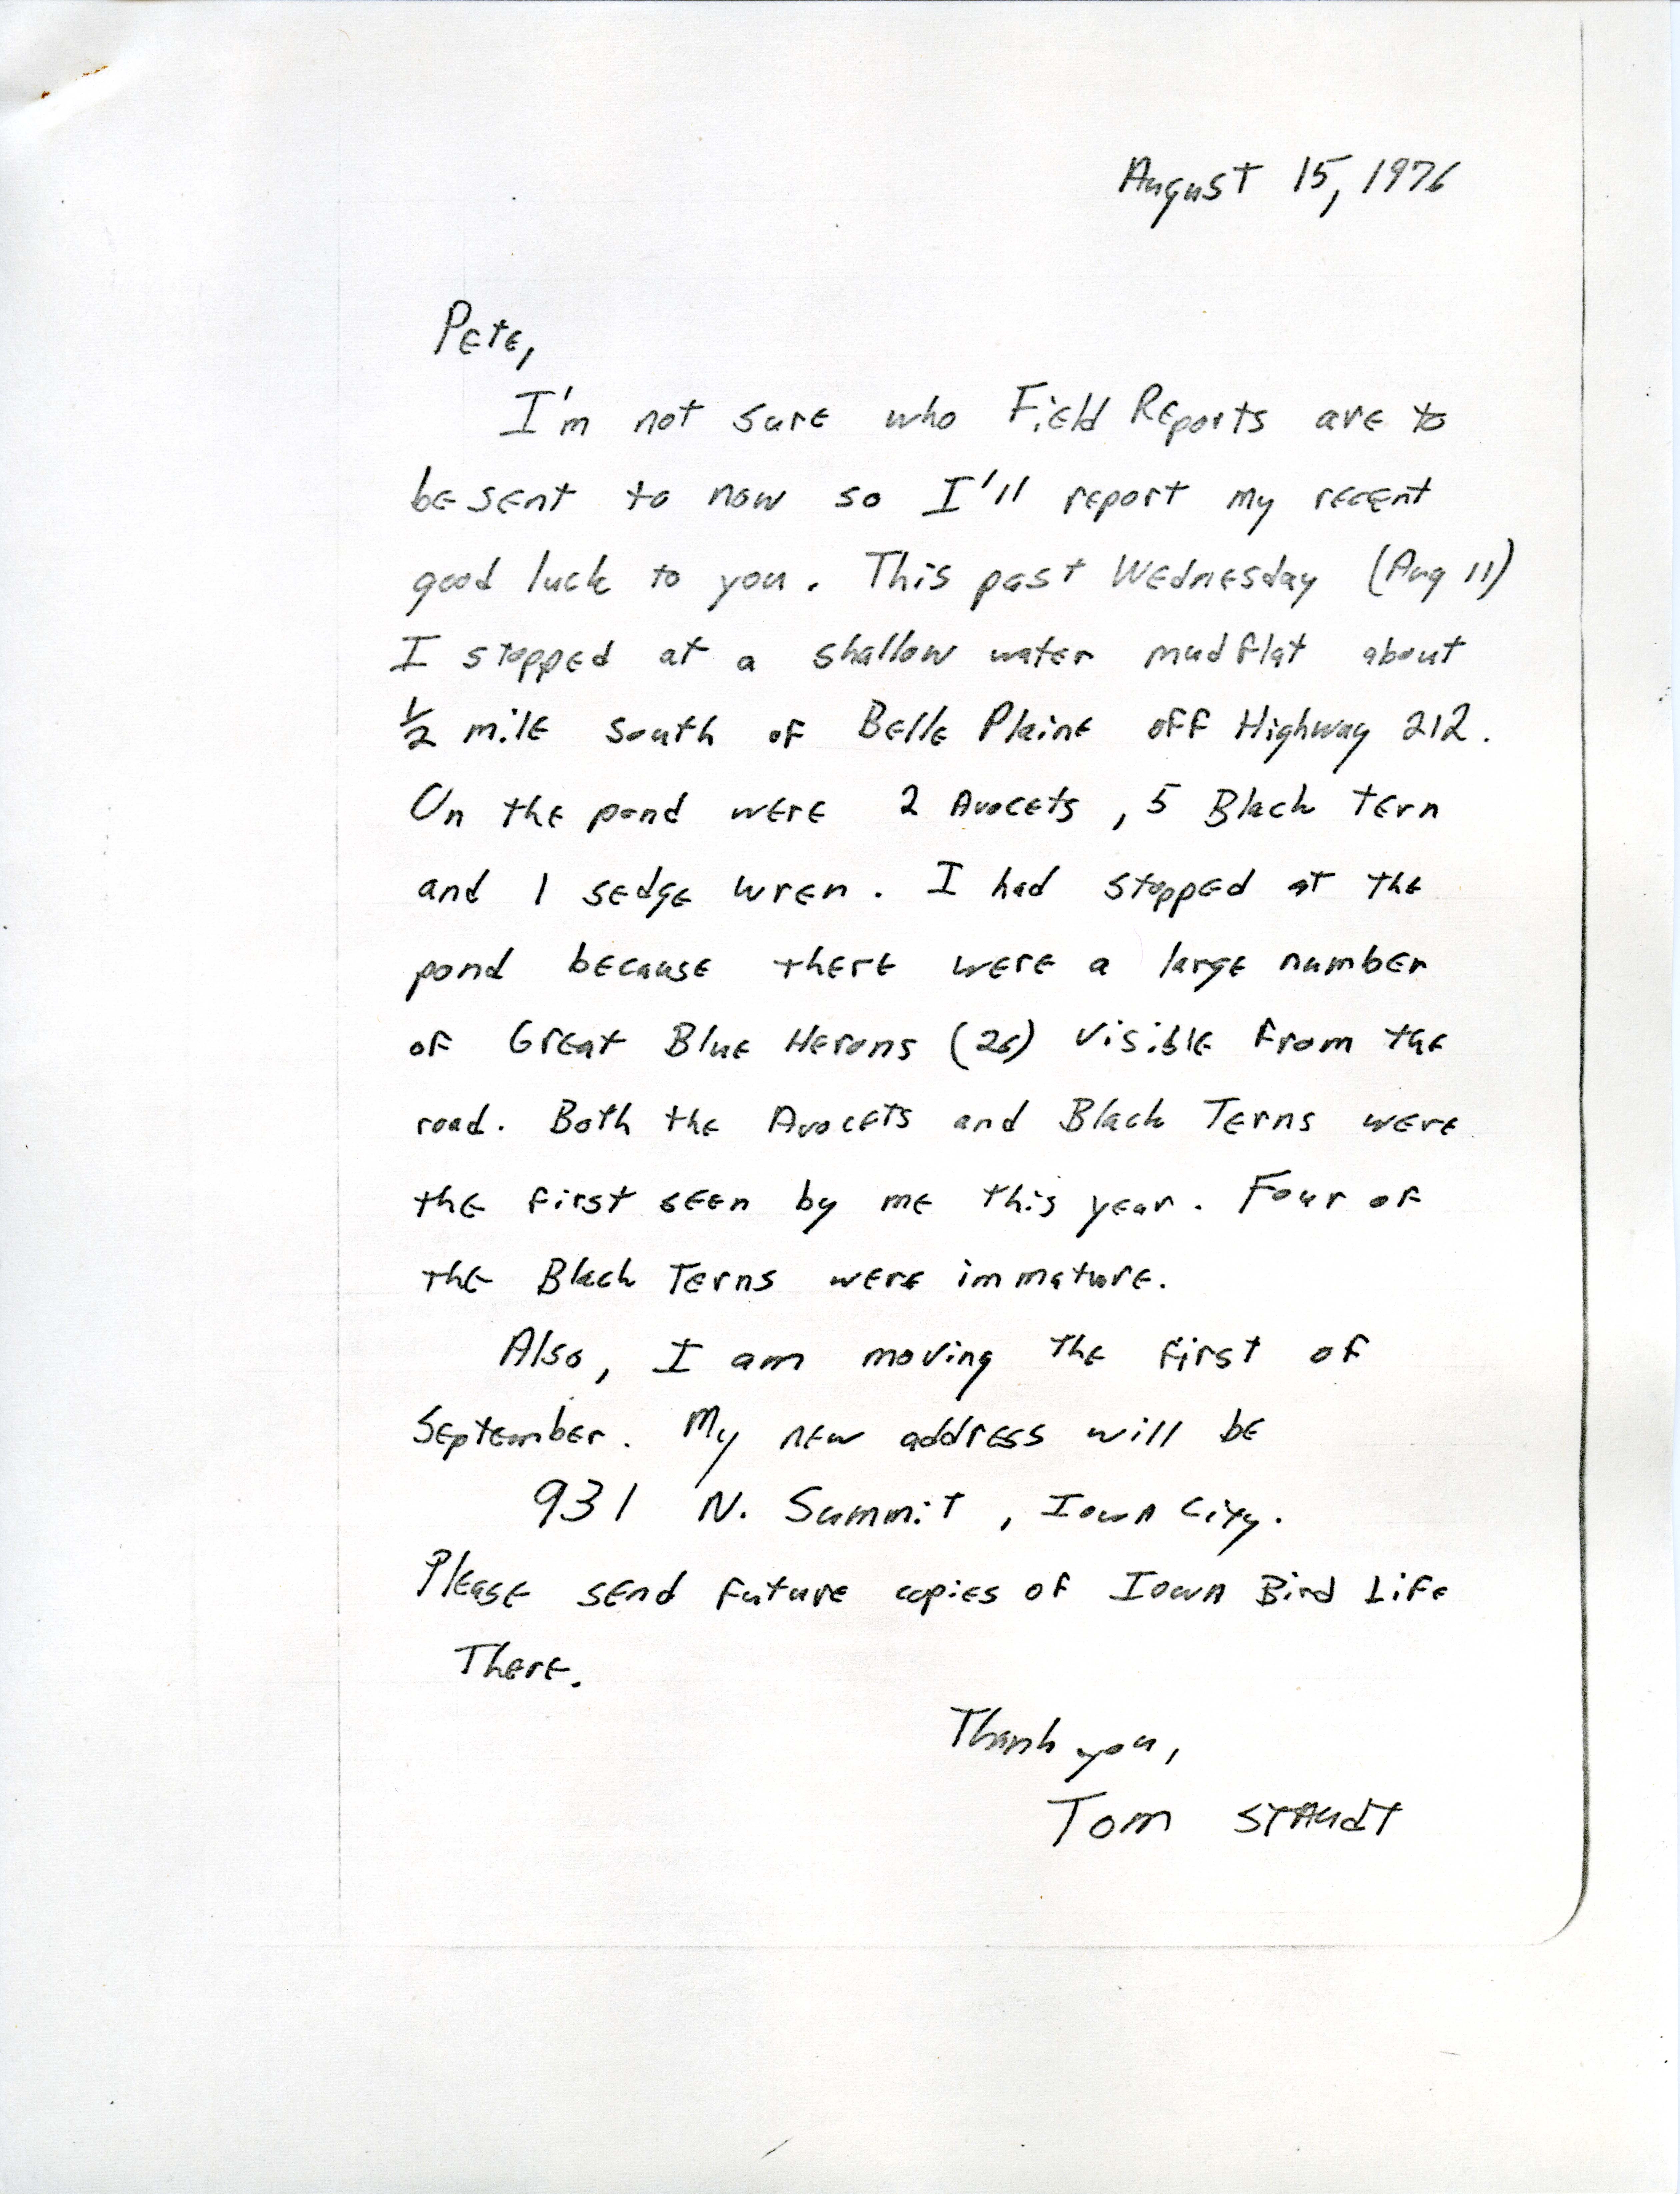 Letter from Tom Staudt to Pete Petersen regarding bird sightings and locations, August 15, 1976